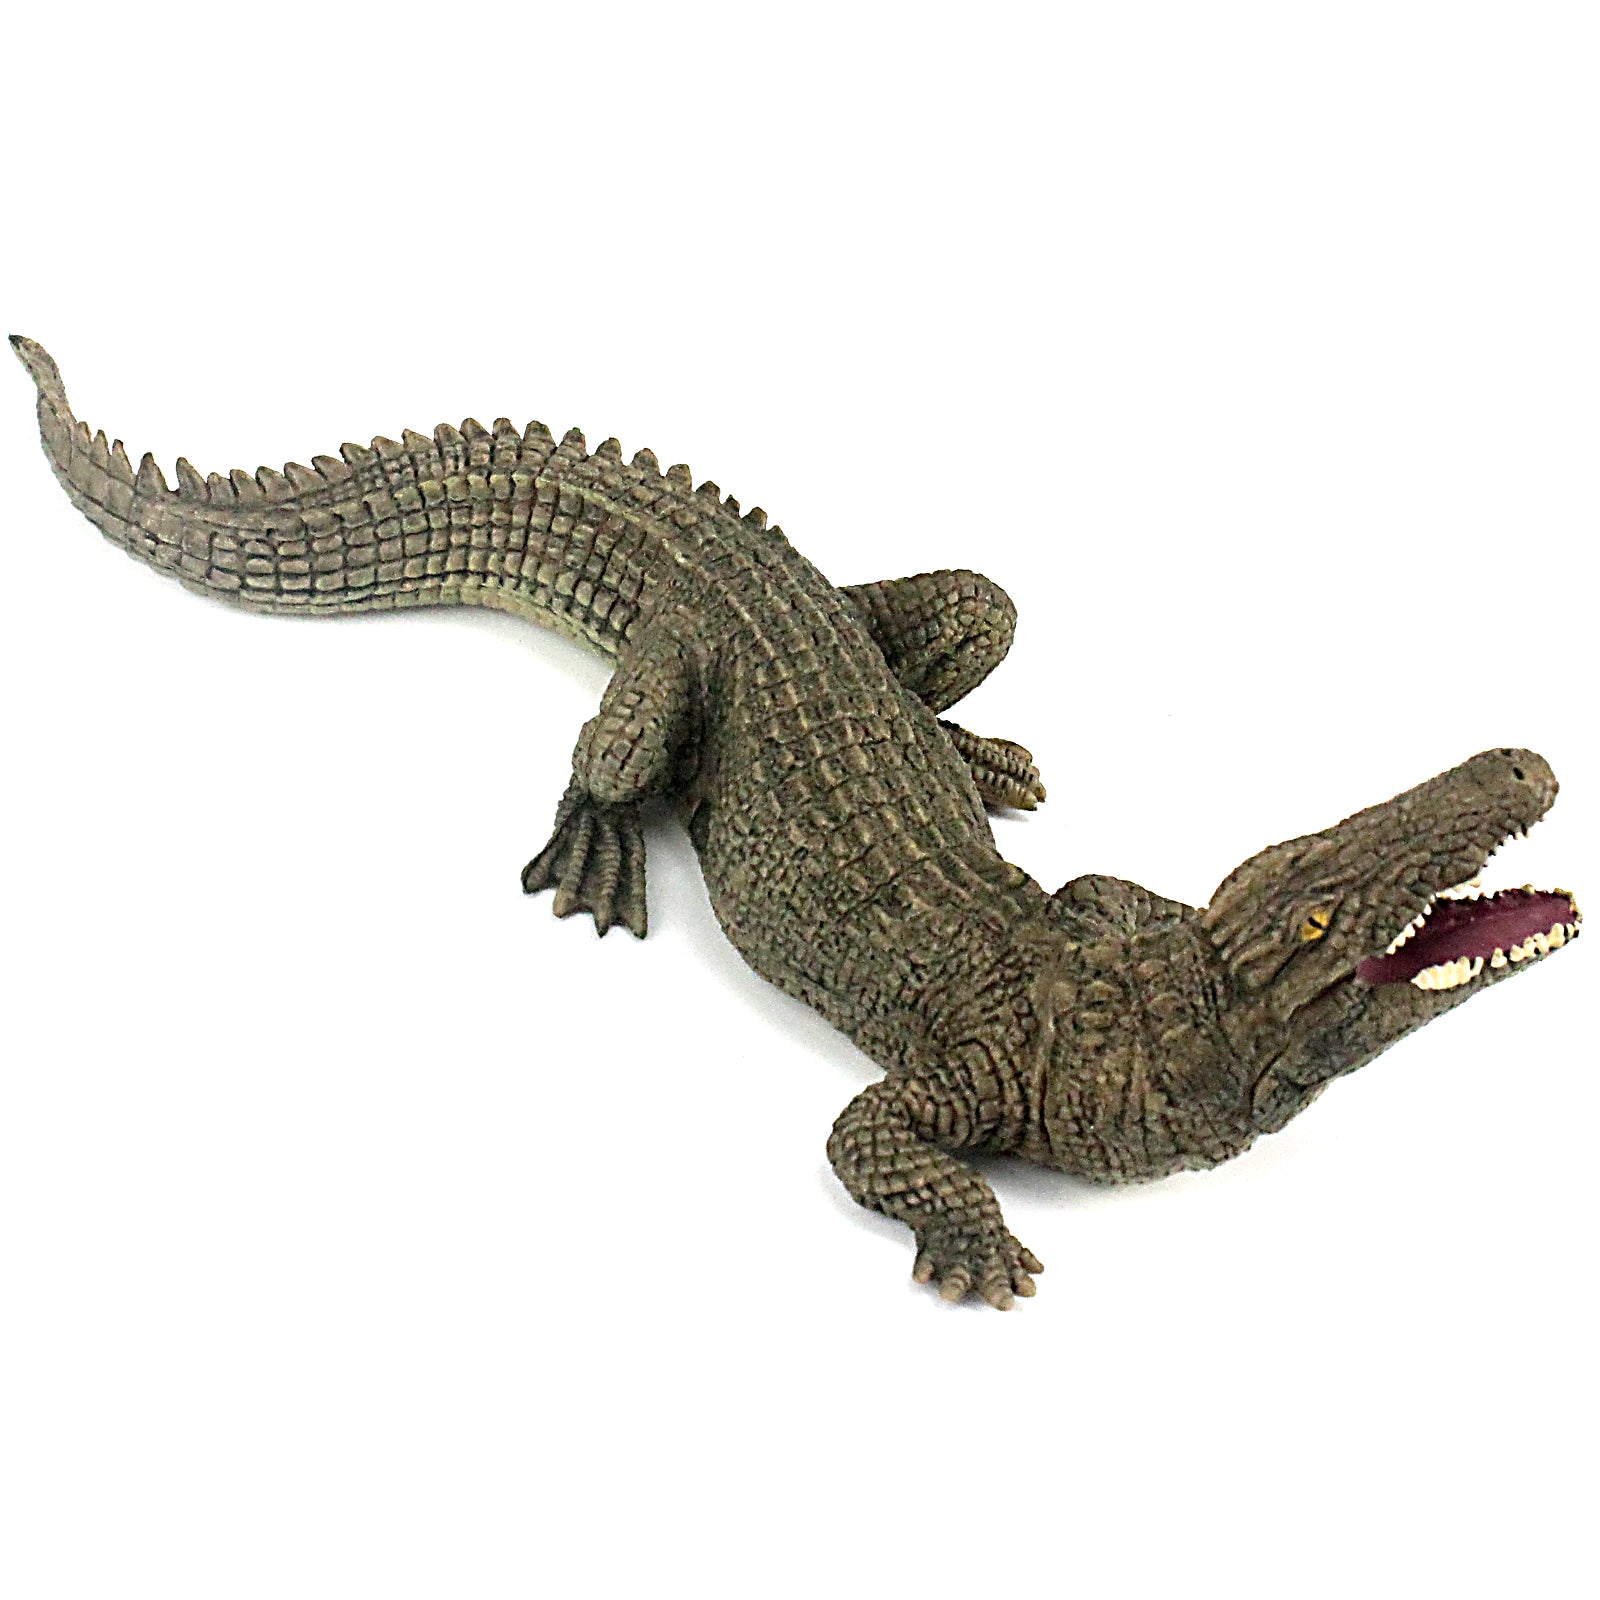 nile crocodile toy